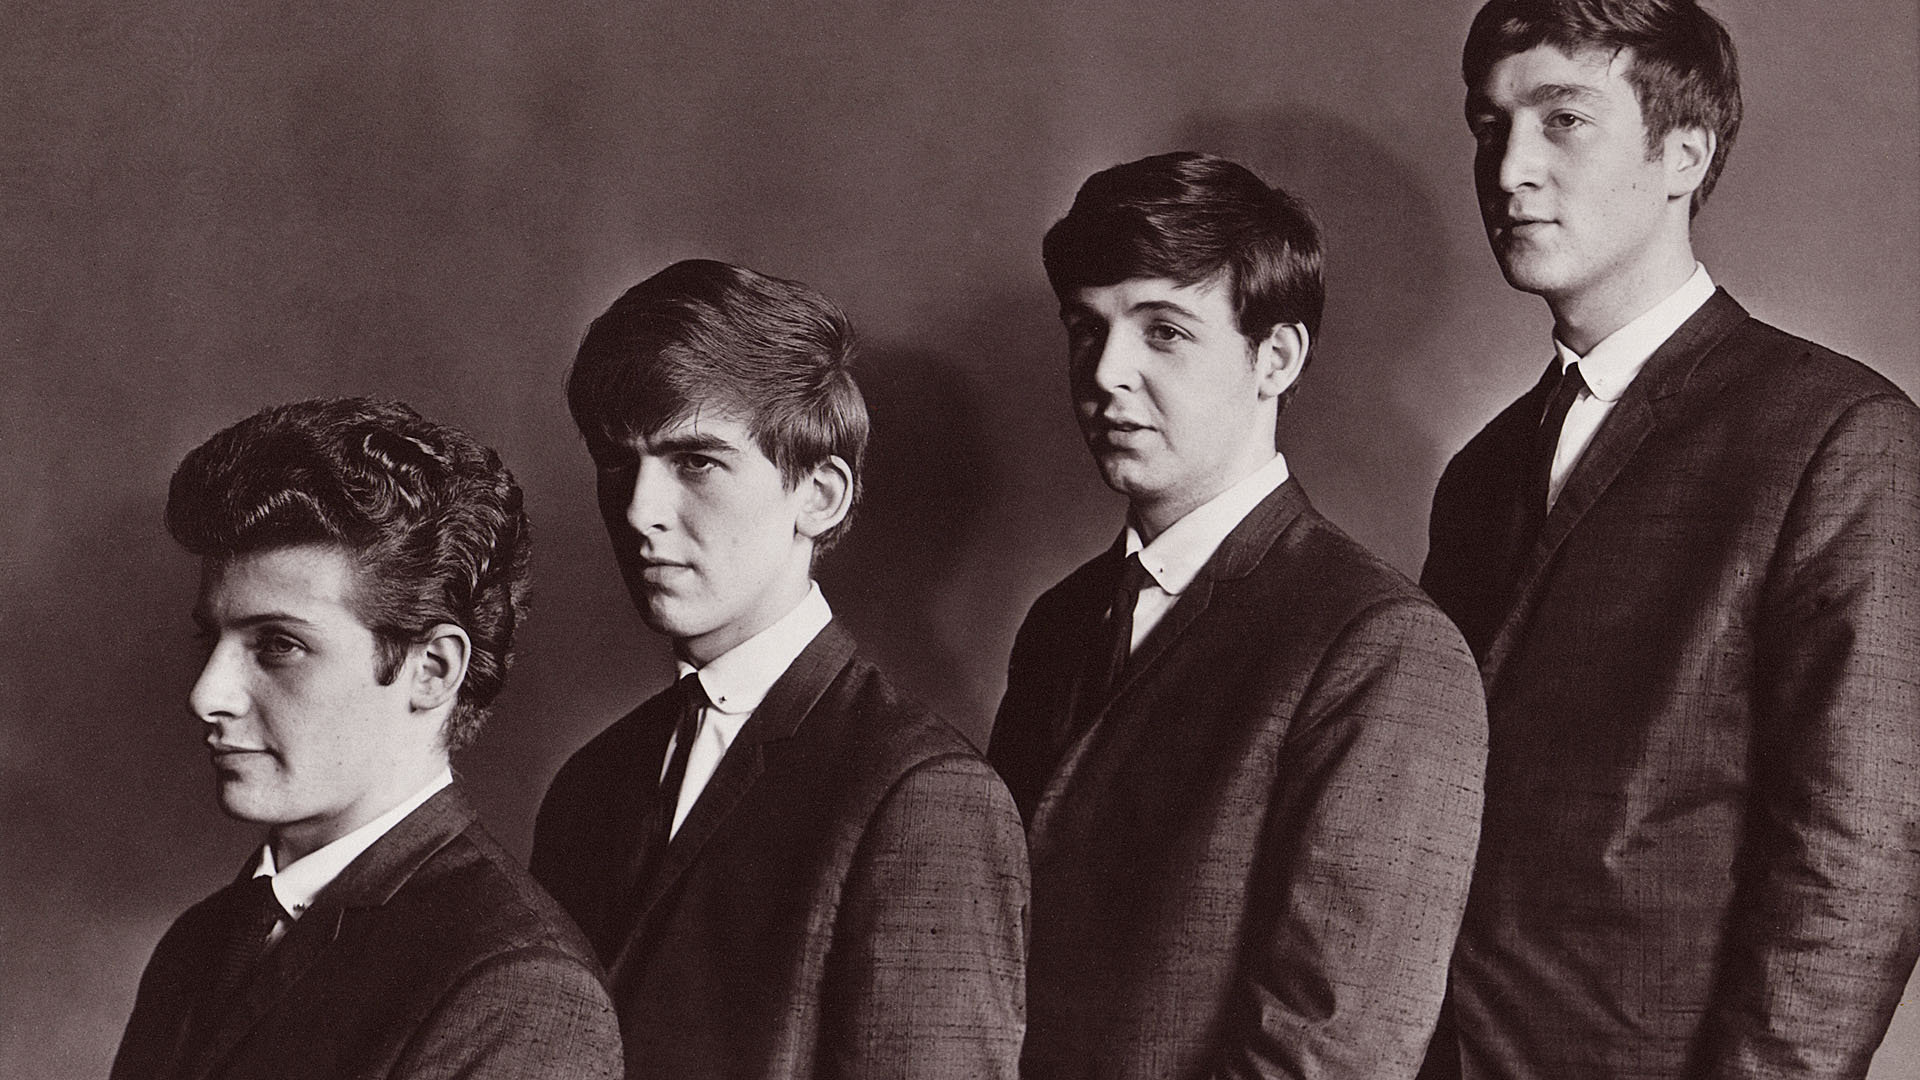 People 1920x1080 The Beatles John Lennon Paul McCartney George Harrison band Pete Best men brunette suits tie monochrome musician rock bands music Group of Men